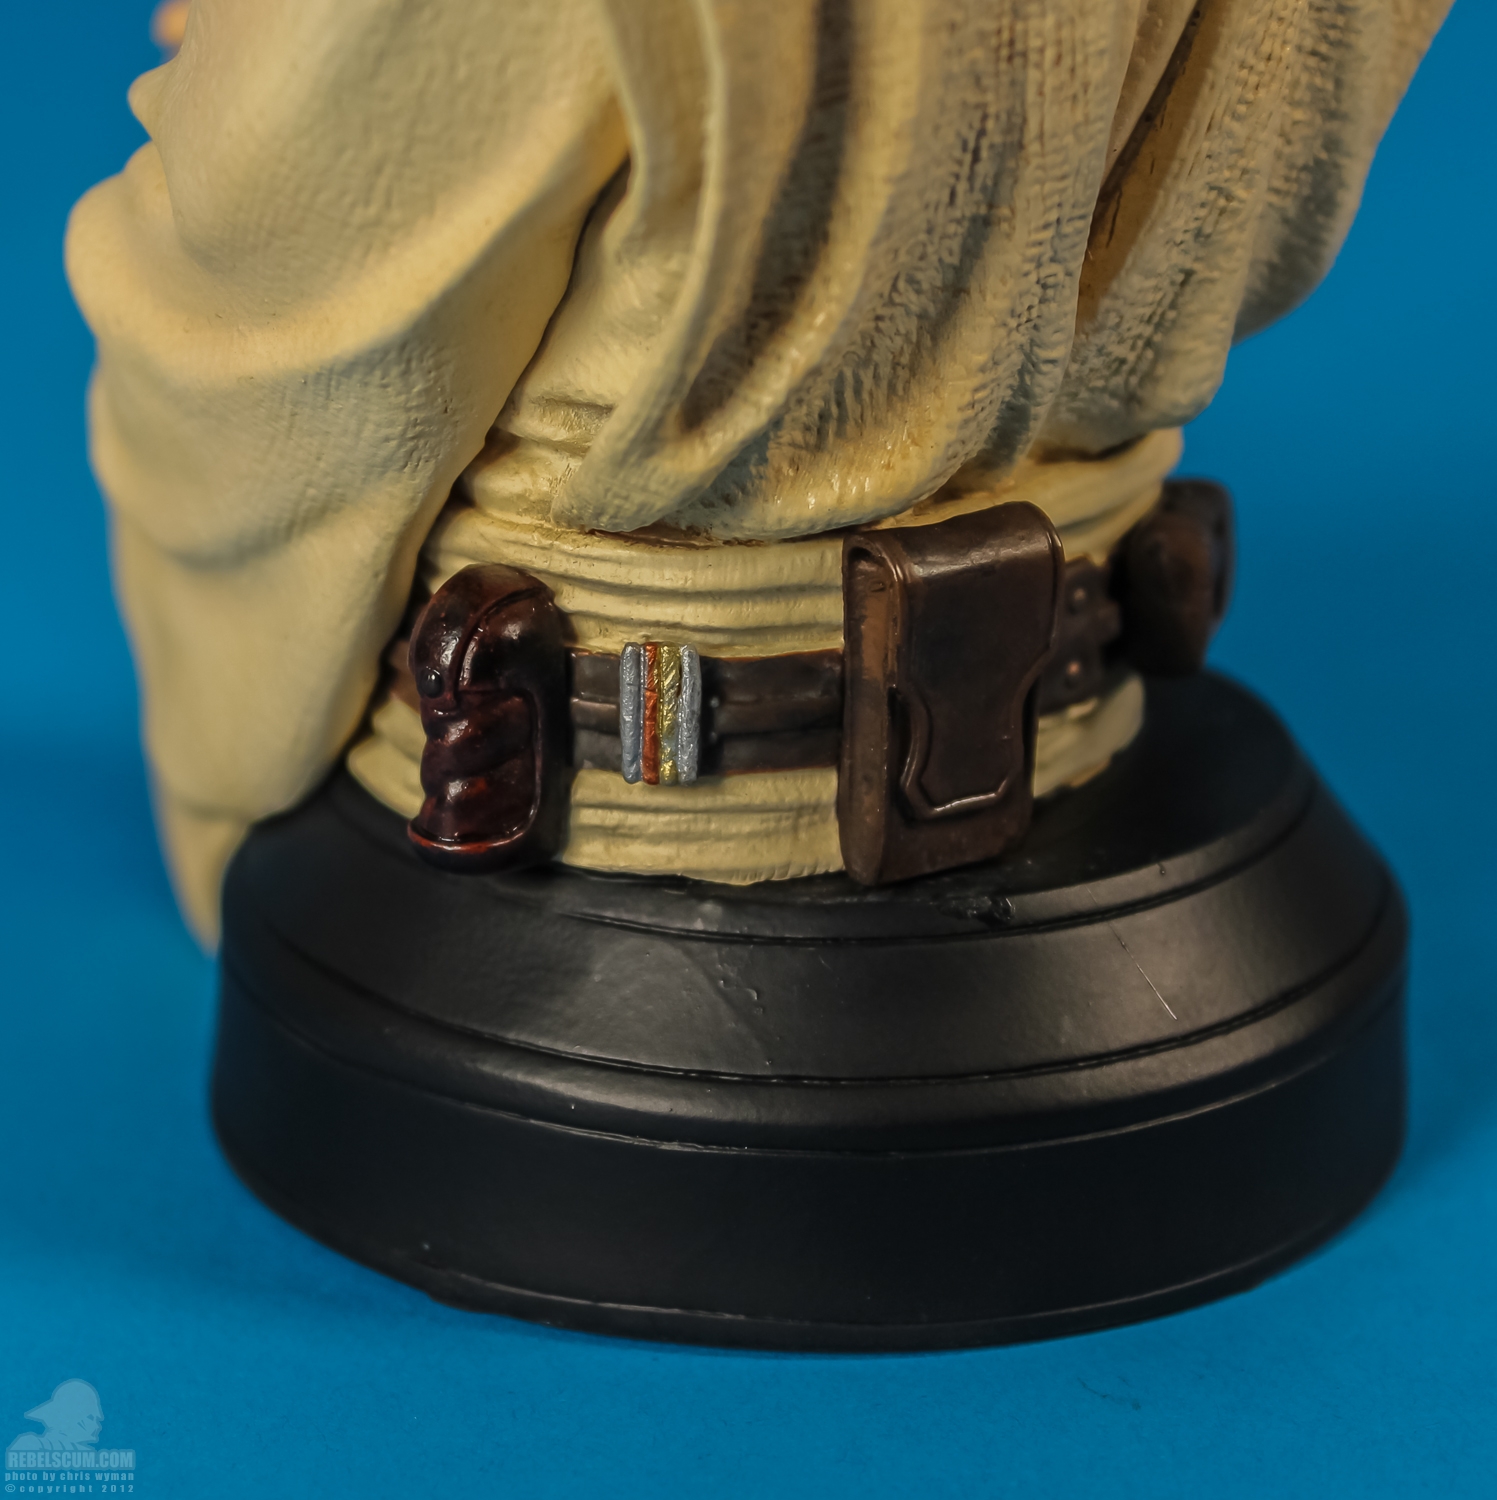 Obi-Wan_Kenobi_ROTS_Exclusive_Mini_Bust_Gentle_Giant-15.jpg